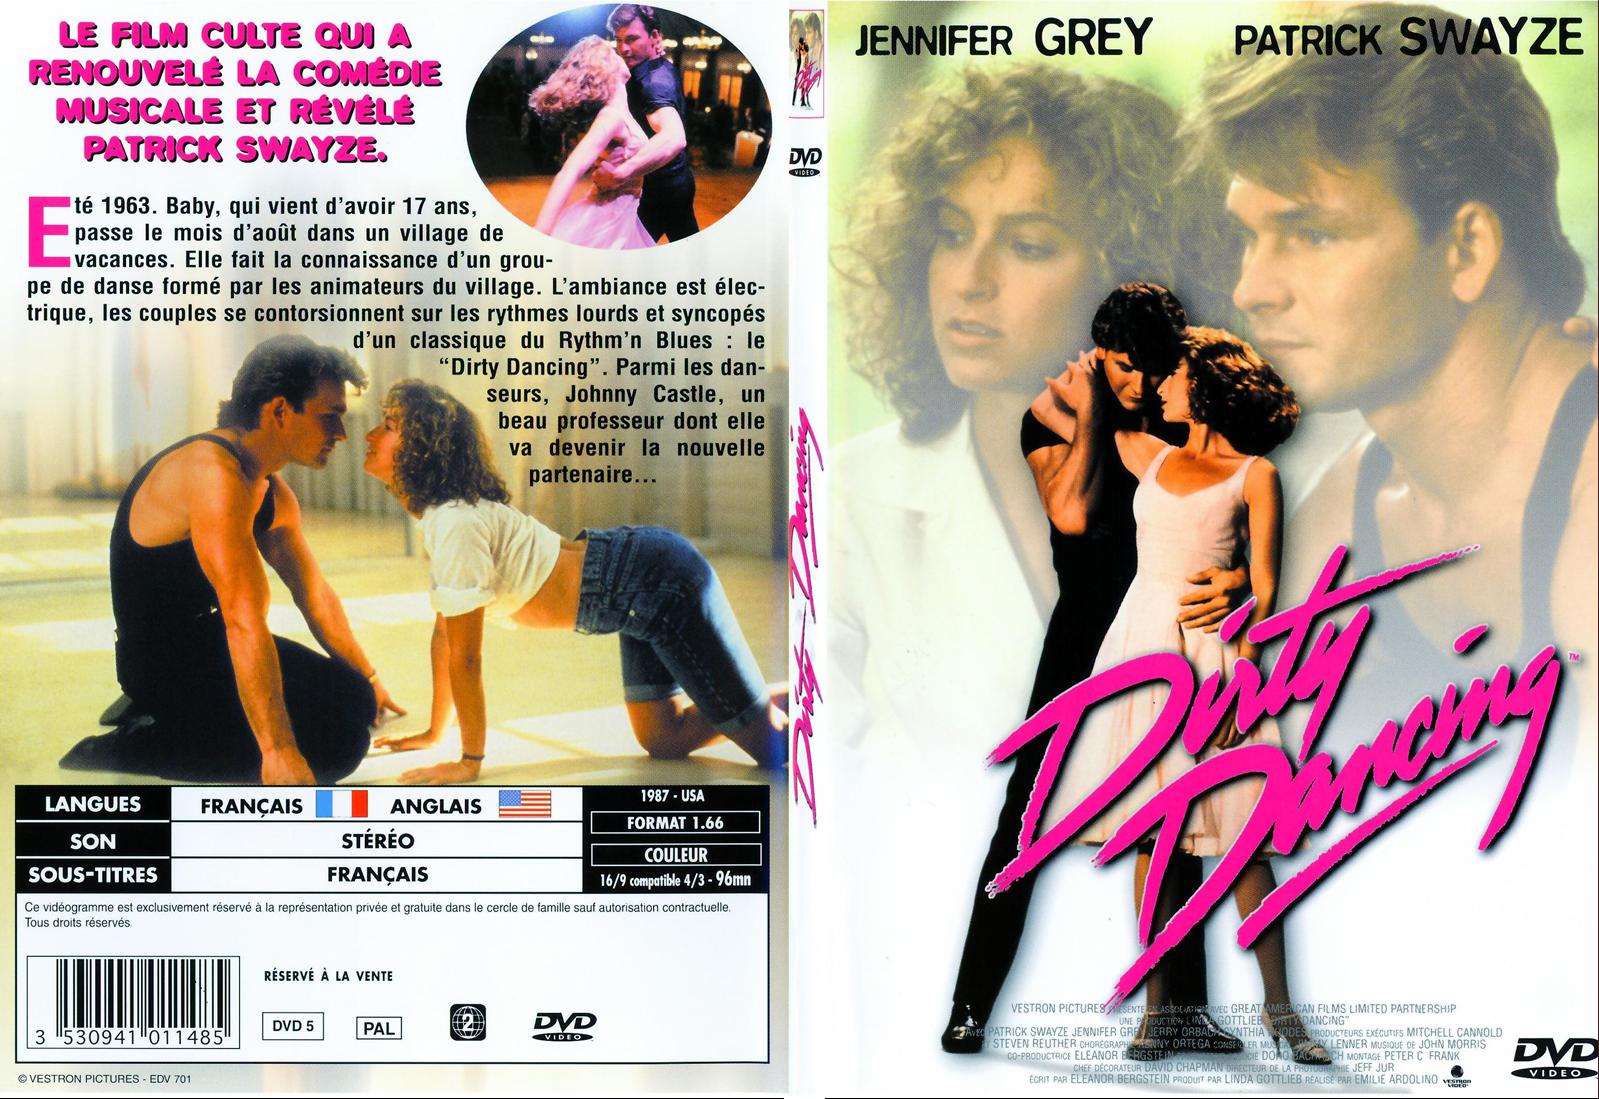 Jaquette DVD Dirty dancing - SLIM